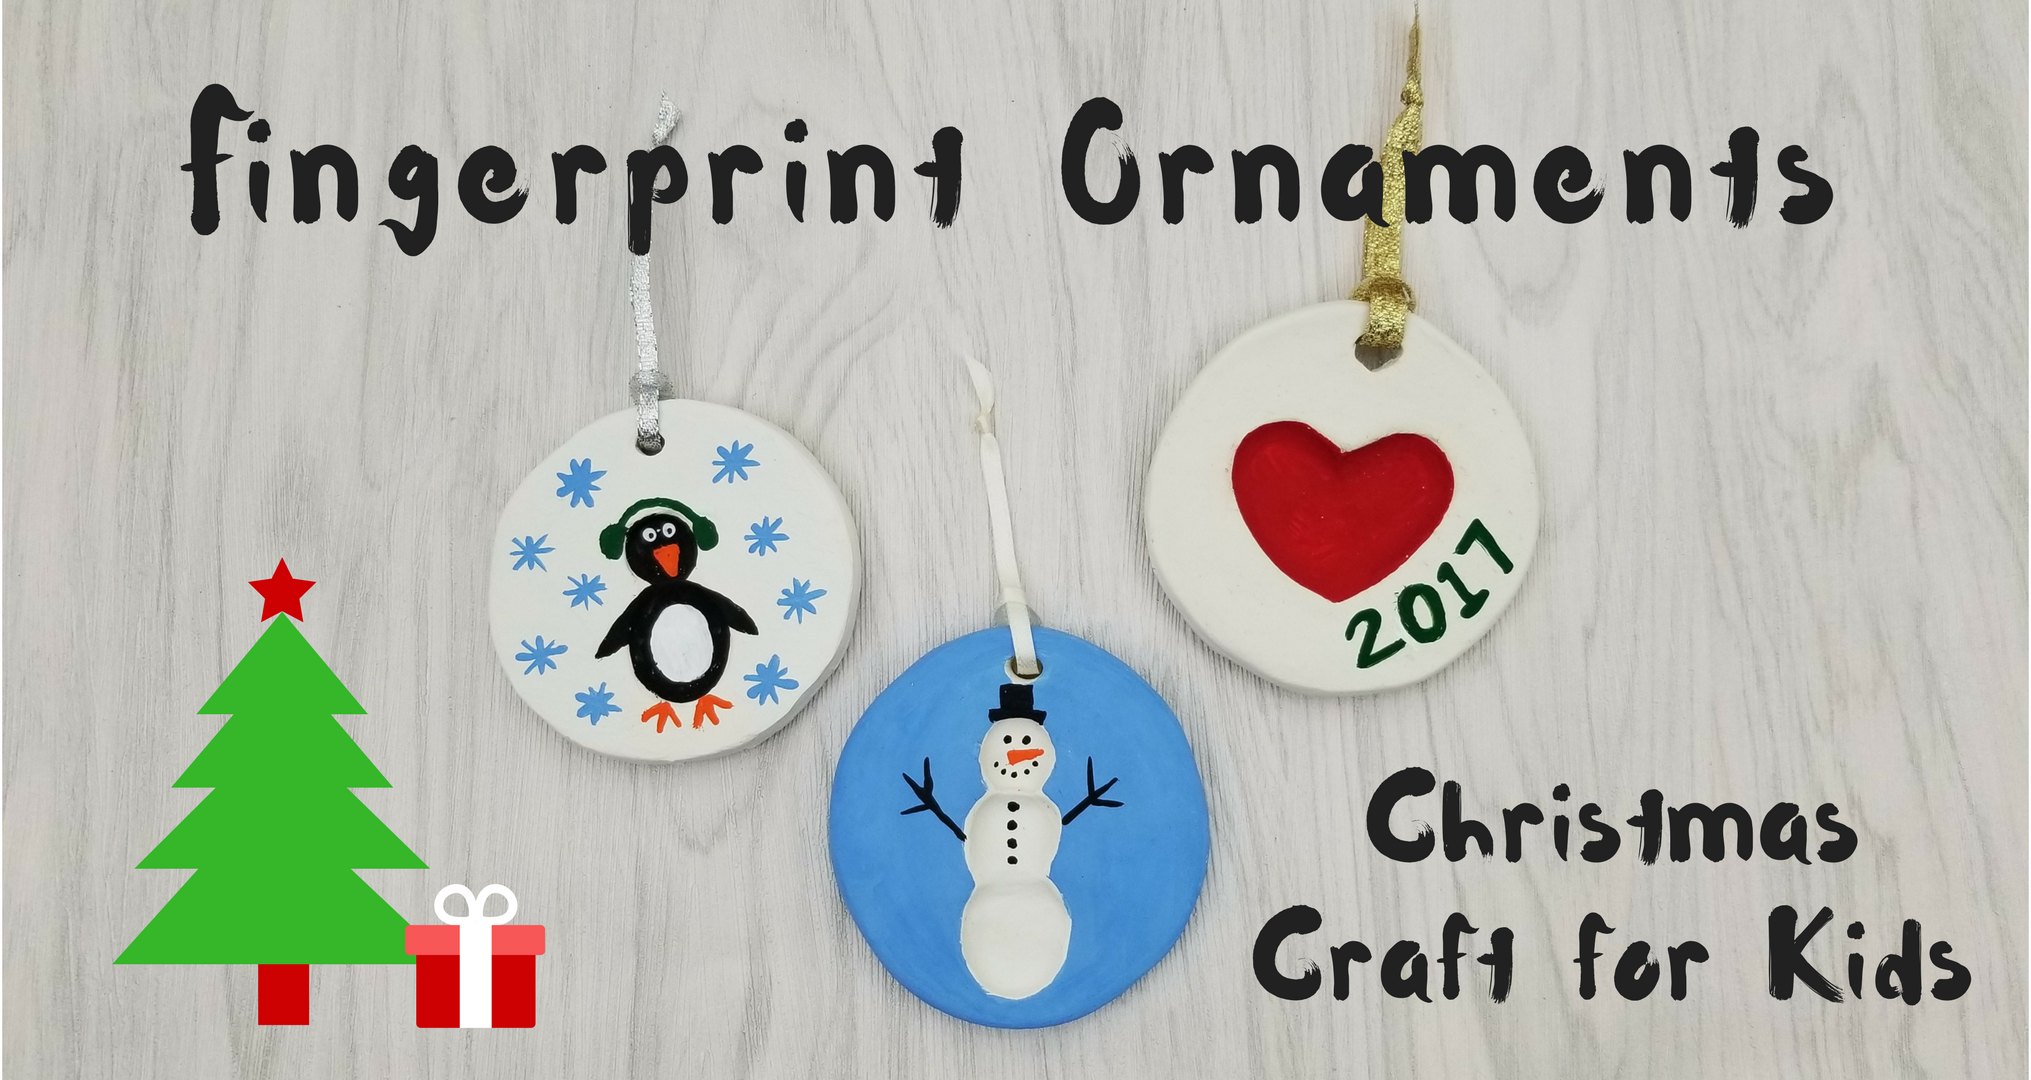 How To Make Diamond Painting Christmas Ornaments, Christmas Crafts